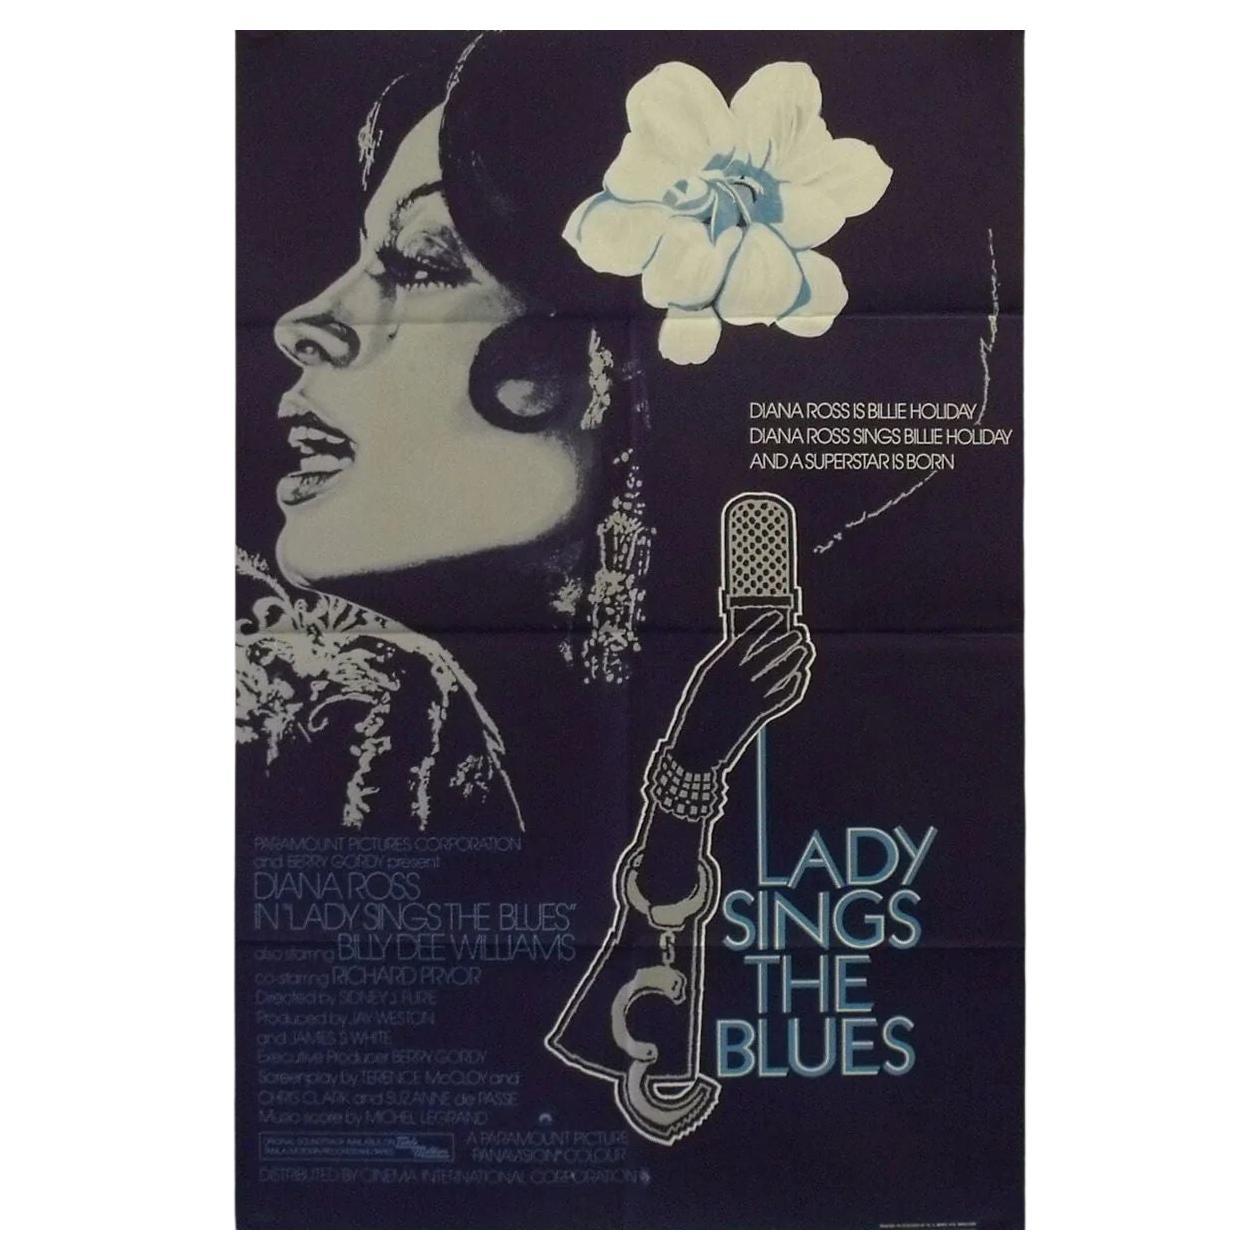 St. Louis Blues Movie Poster 1958 1 Sheet (27x41)